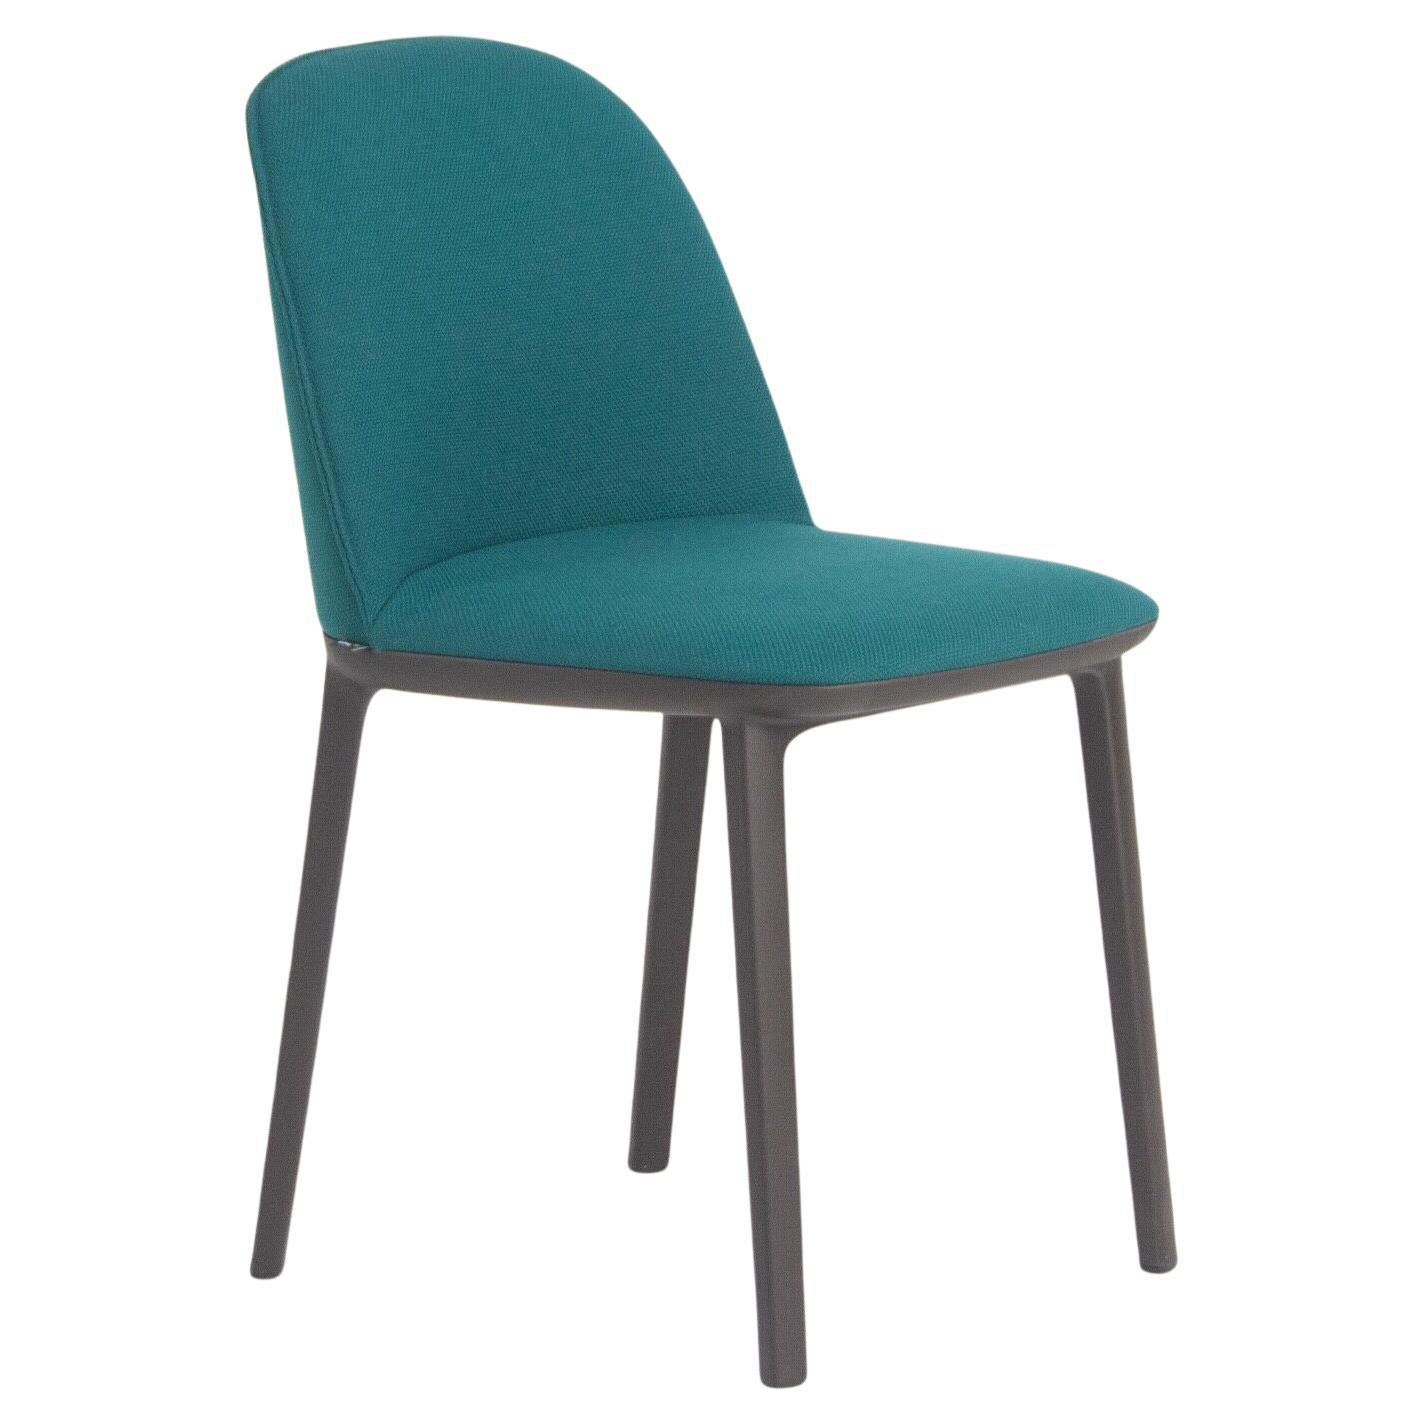 Chaise d'appoint Vitra Softshell avec tissu bleu sarcelle de Ronan & Erwan Bouroullec, 2019